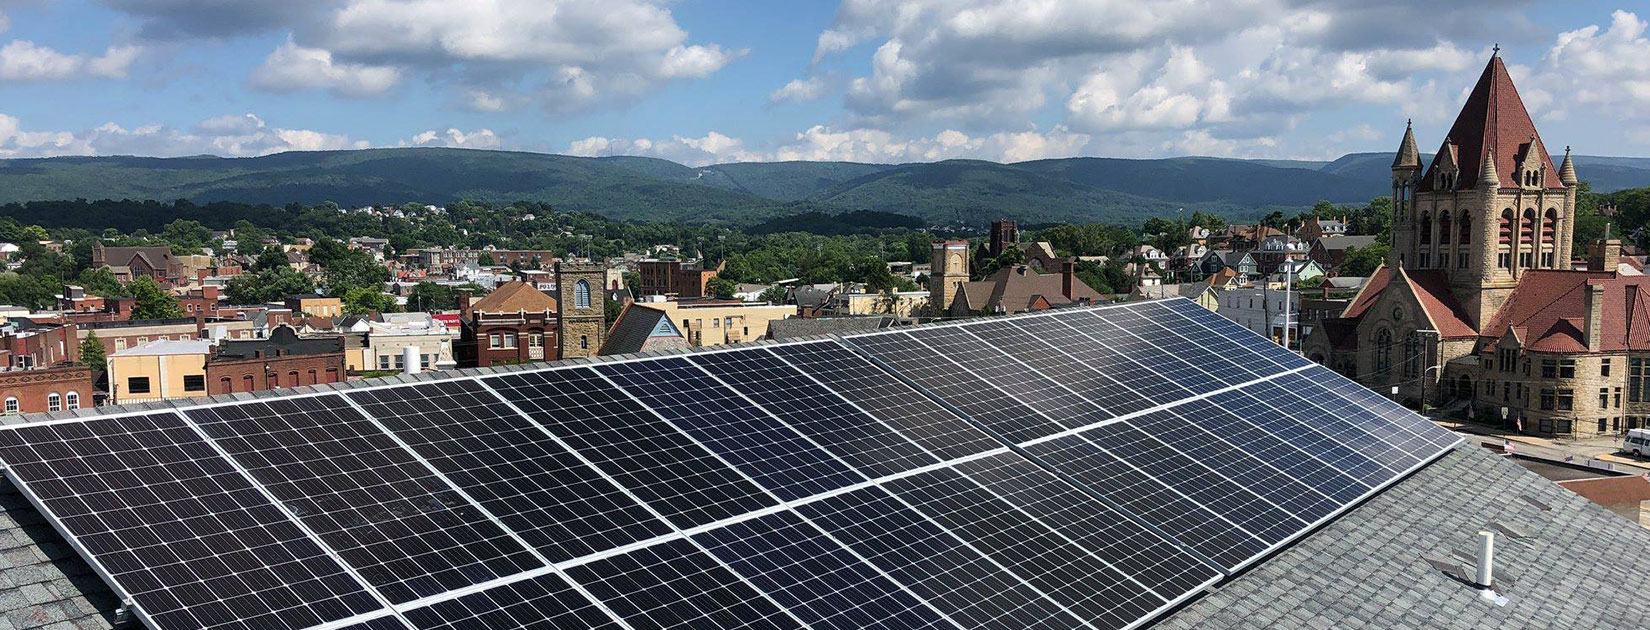 Pittsburgh Solar Company Reviews